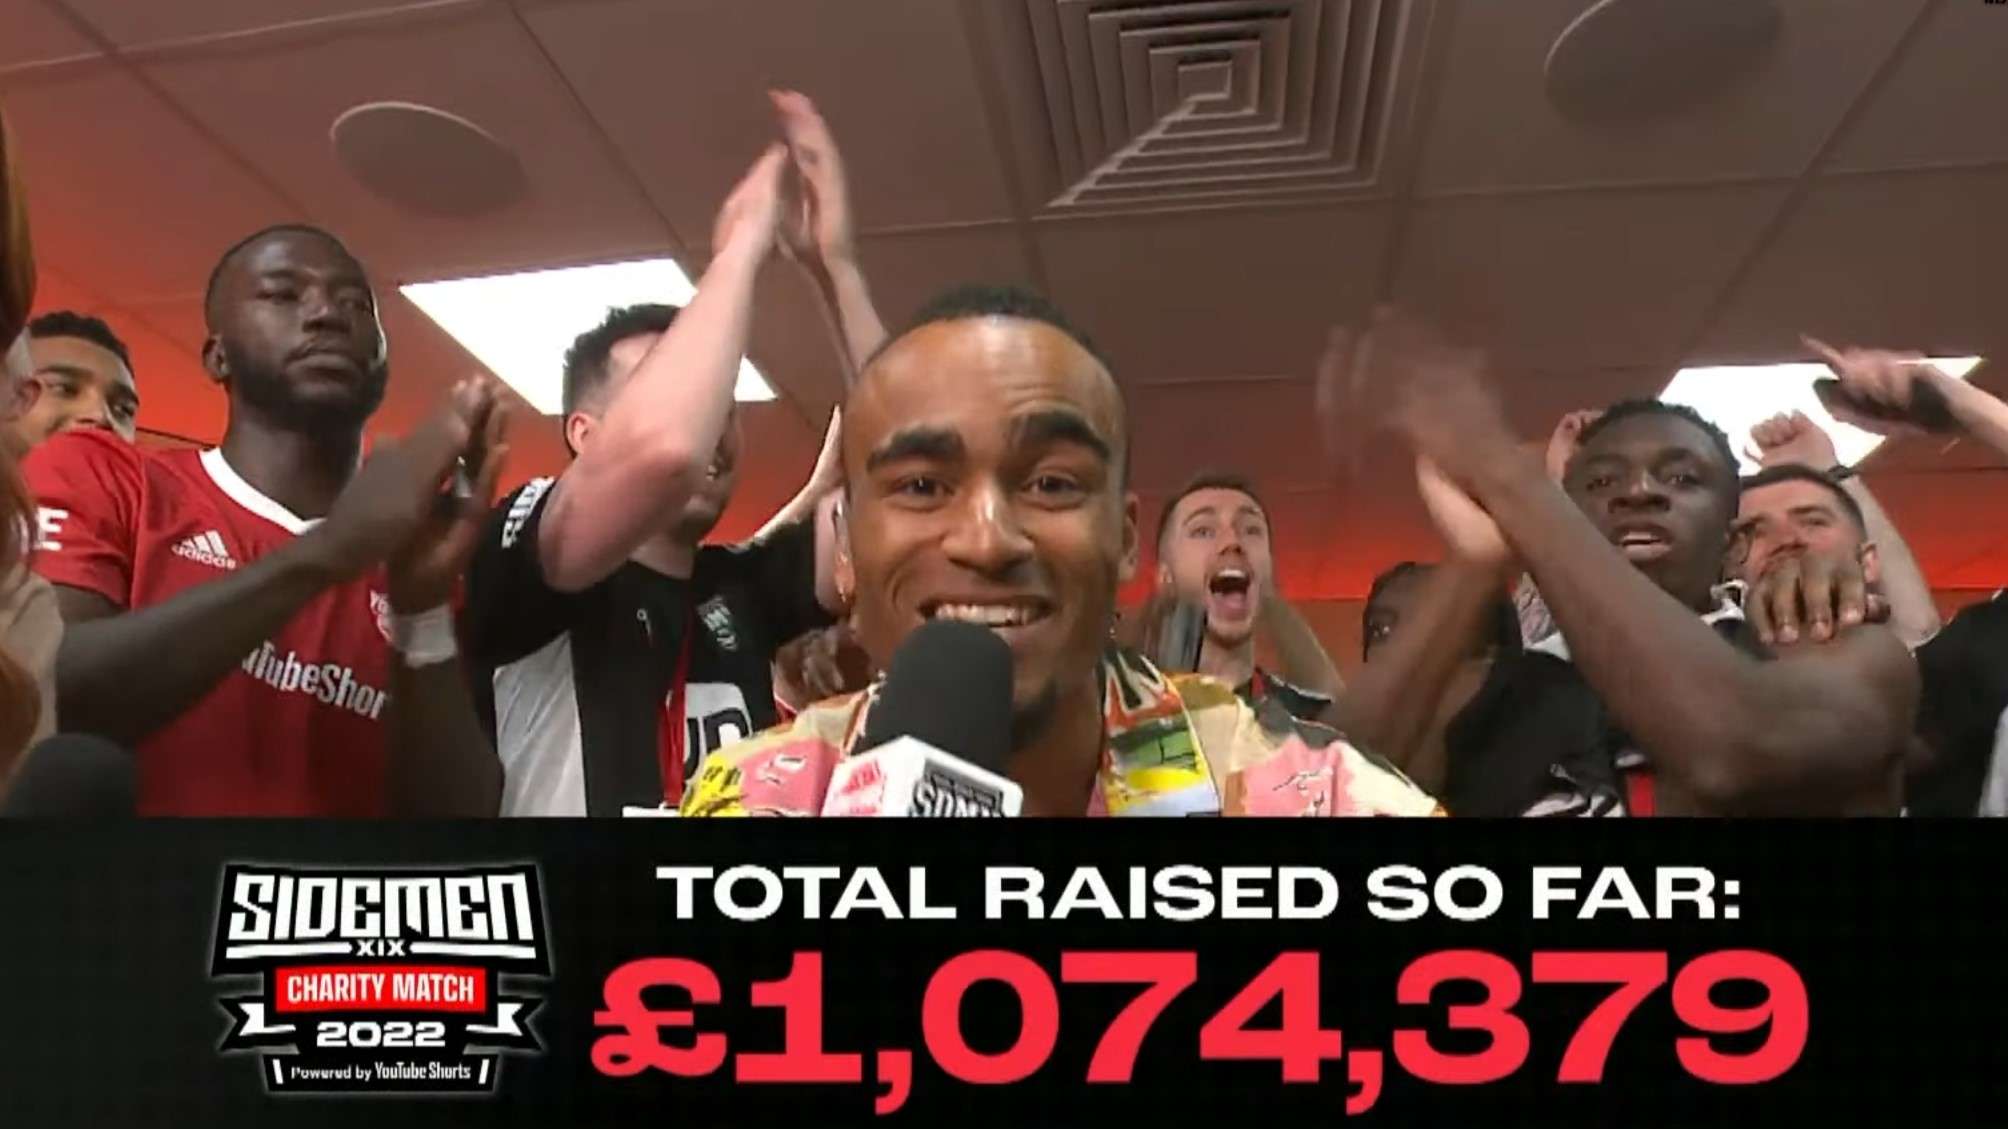 Sidemen Charity Match 1 million raised